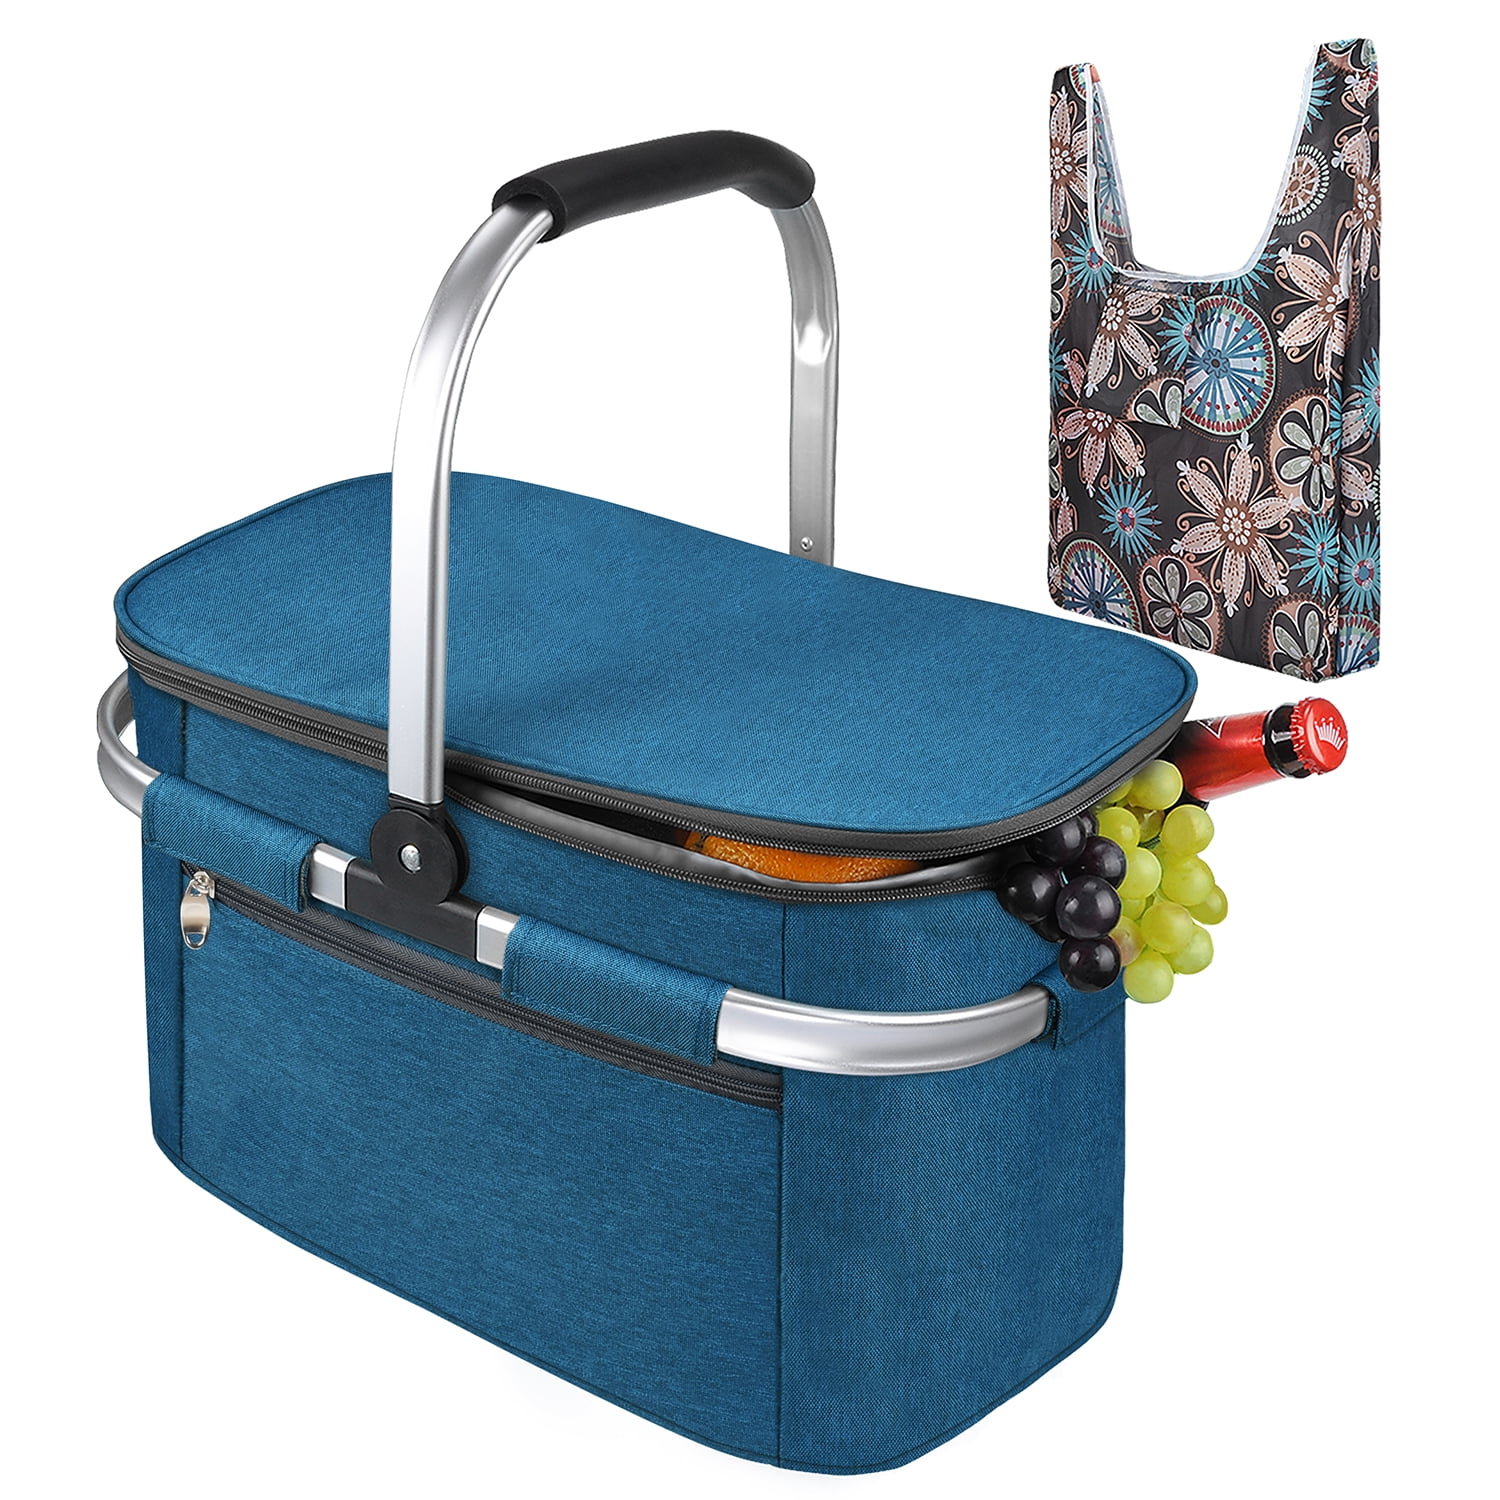 GEEZY 4 Person Insulated Cooler Bag Cool Picnic Hamper Carrier Basket 